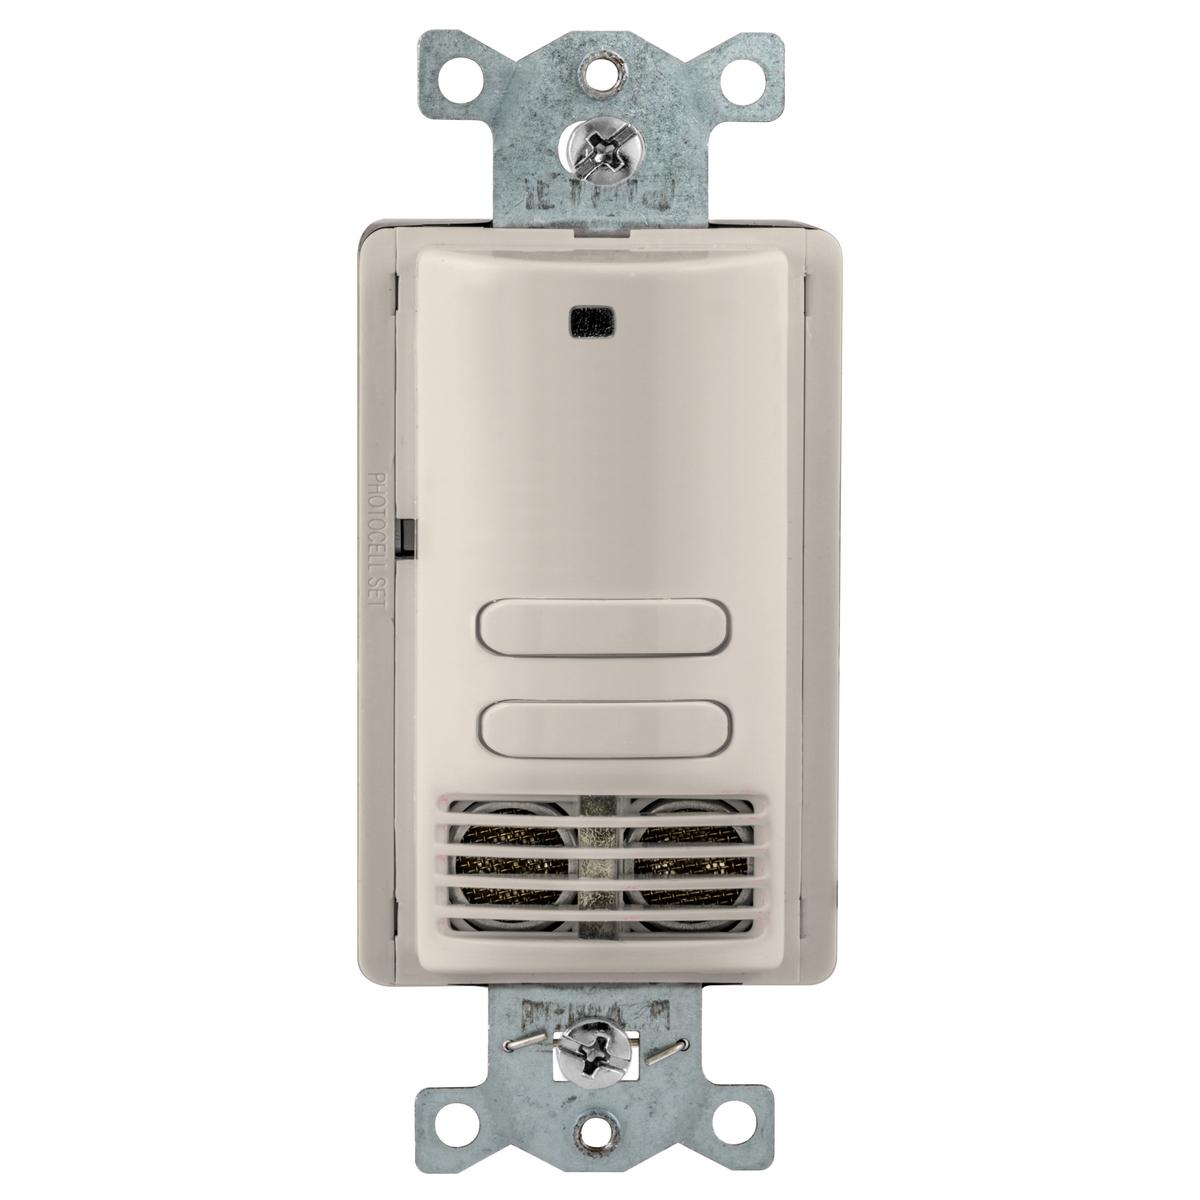 Hubbell AU2000LA22 Vacancy Sensors, Wall Switch, AdaptiveUltrasonic, 2 Circuit, 120/277V AC, Light Almond 